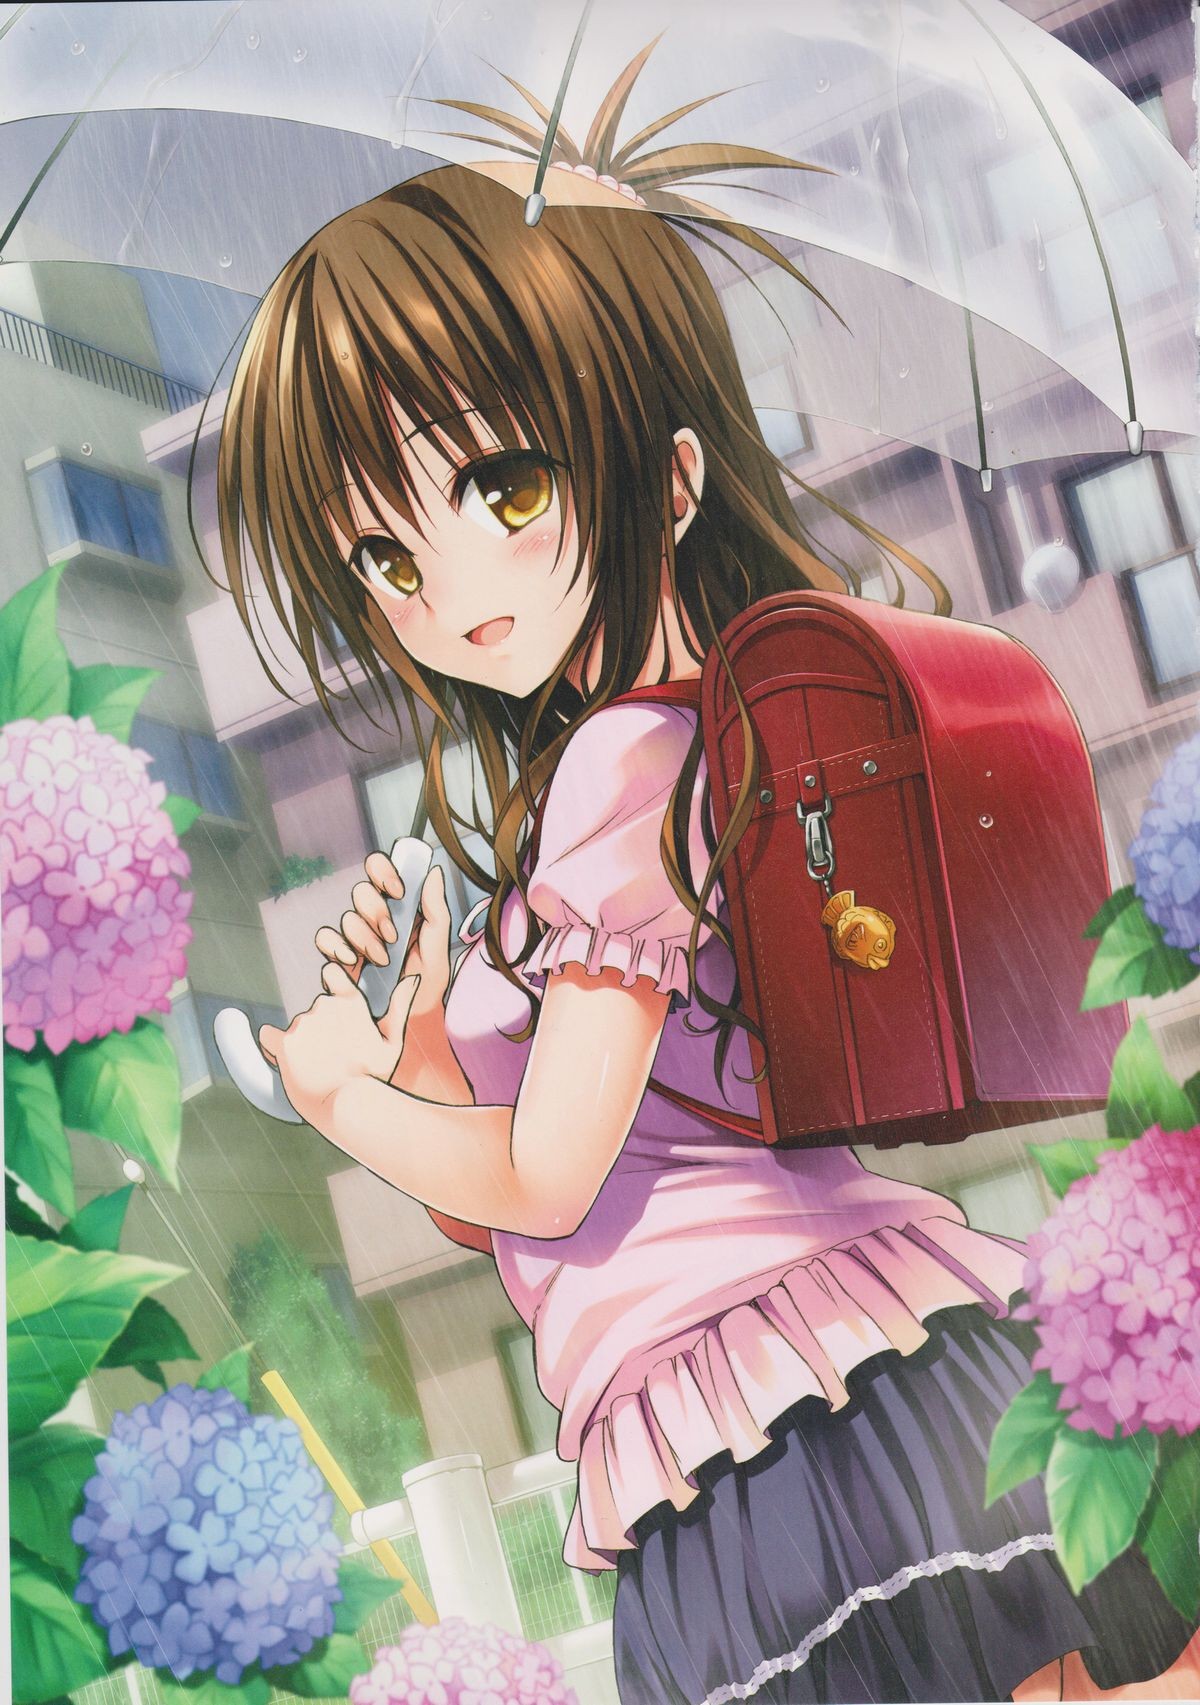 Anime 1200x1705 To Love-ru Yuuki Mikan anime anime girls brunette brown eyes rain umbrella flowers loli Yabuki Kentarou backpacks women with umbrella skirt